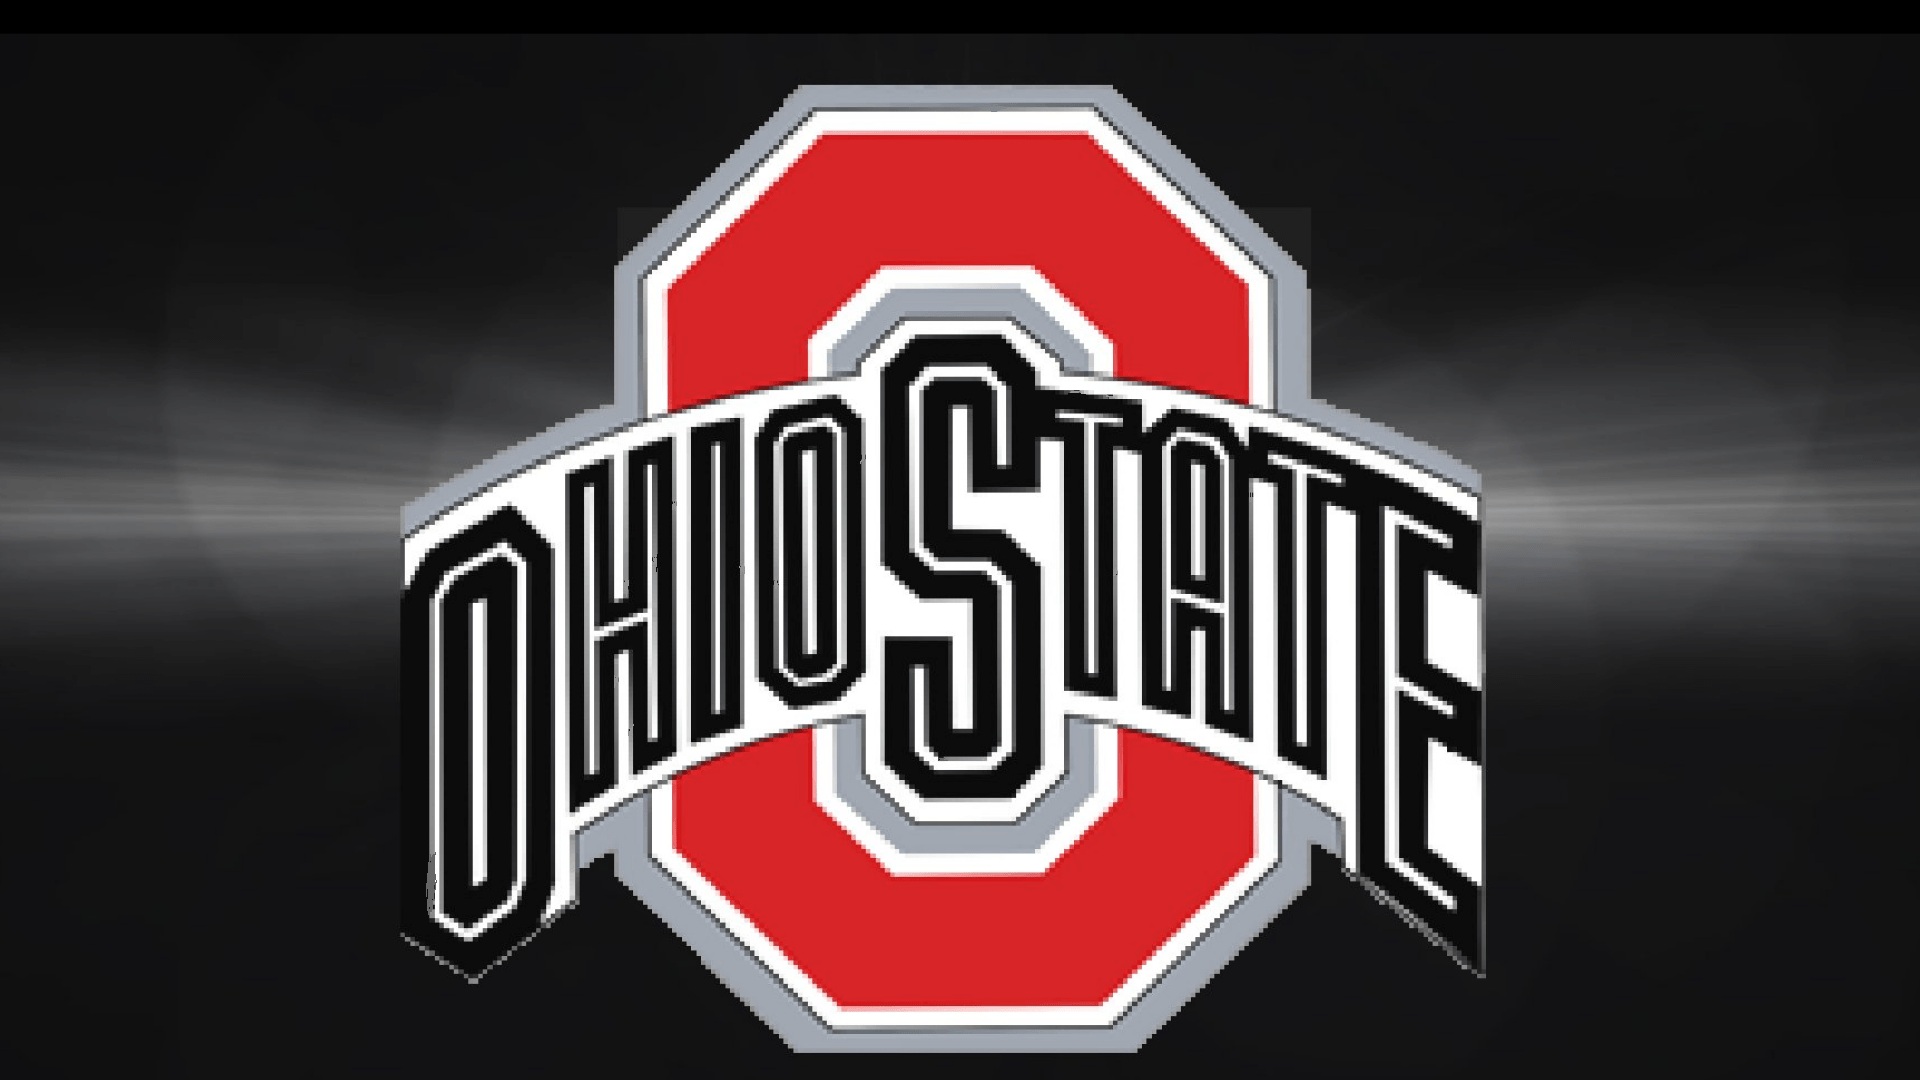 Ohio State Logo - Ohio State Buckeyes image RED BLOCK O ON GRAY & BLACK HD wallpaper